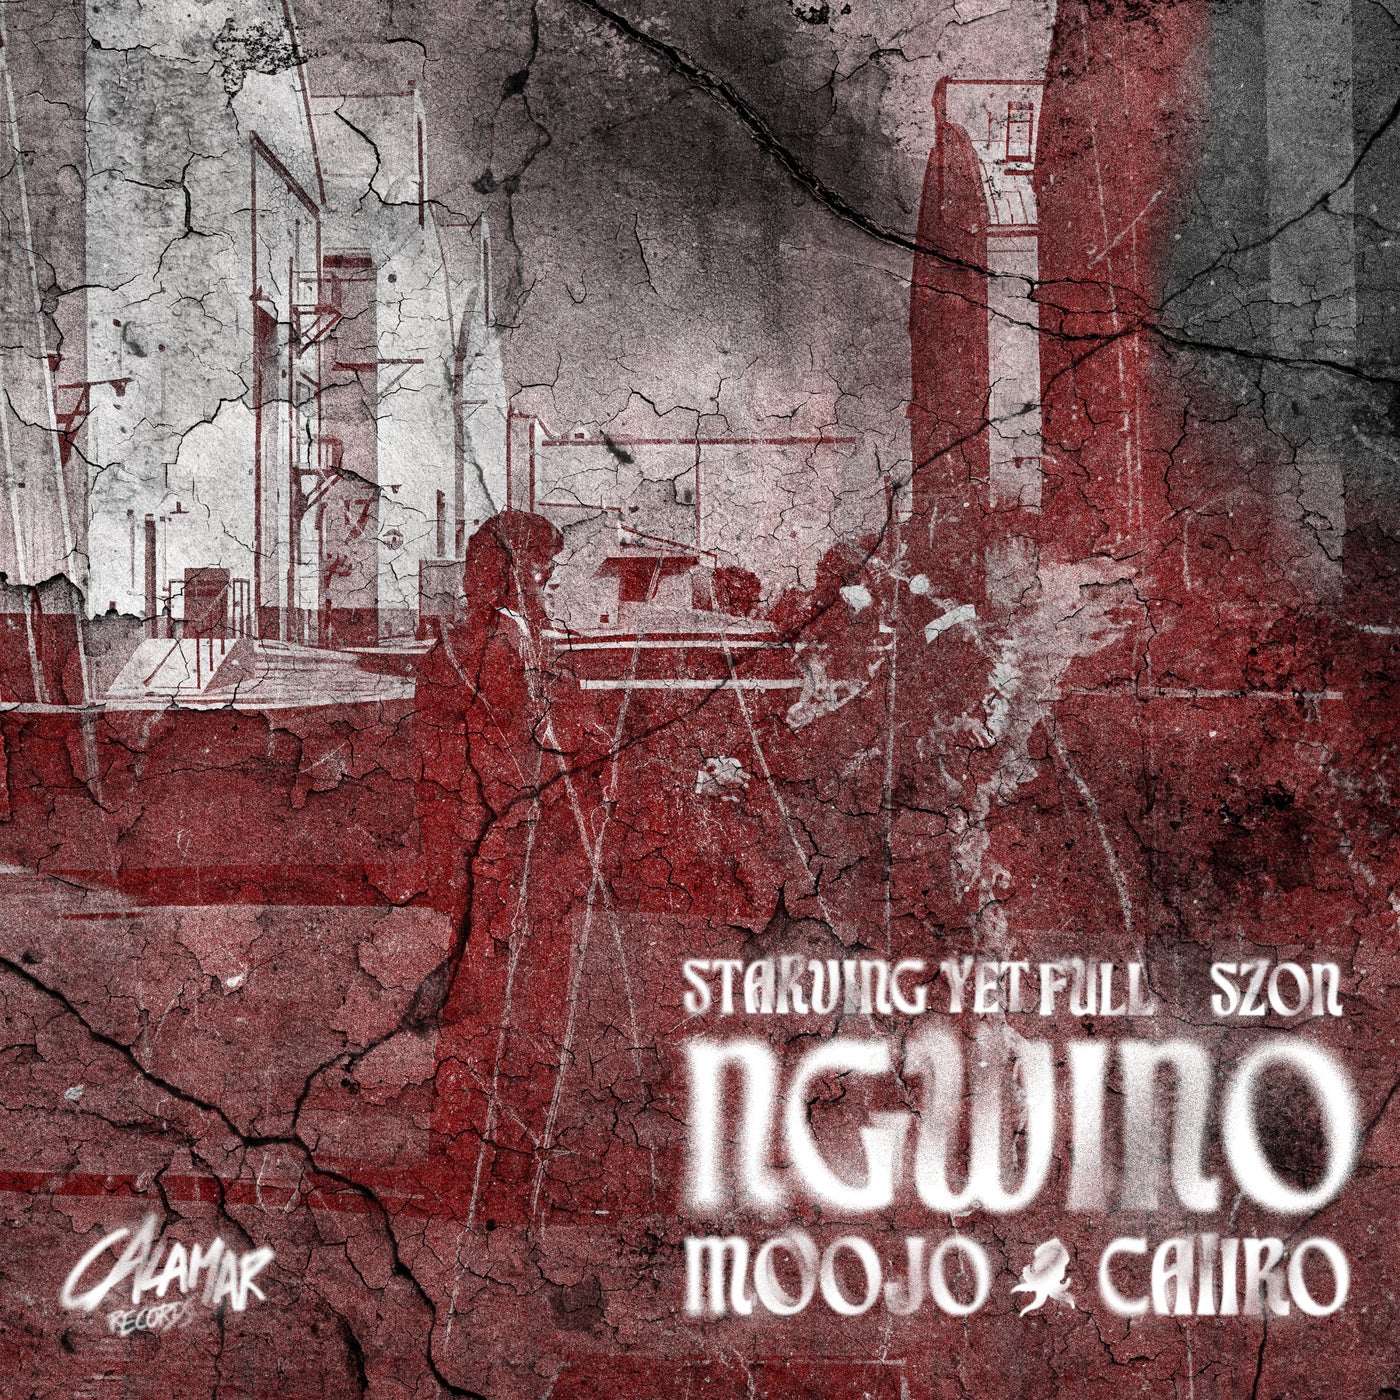 image cover: Caiiro, Moojo, Szon - NGWINO on Calamar Records